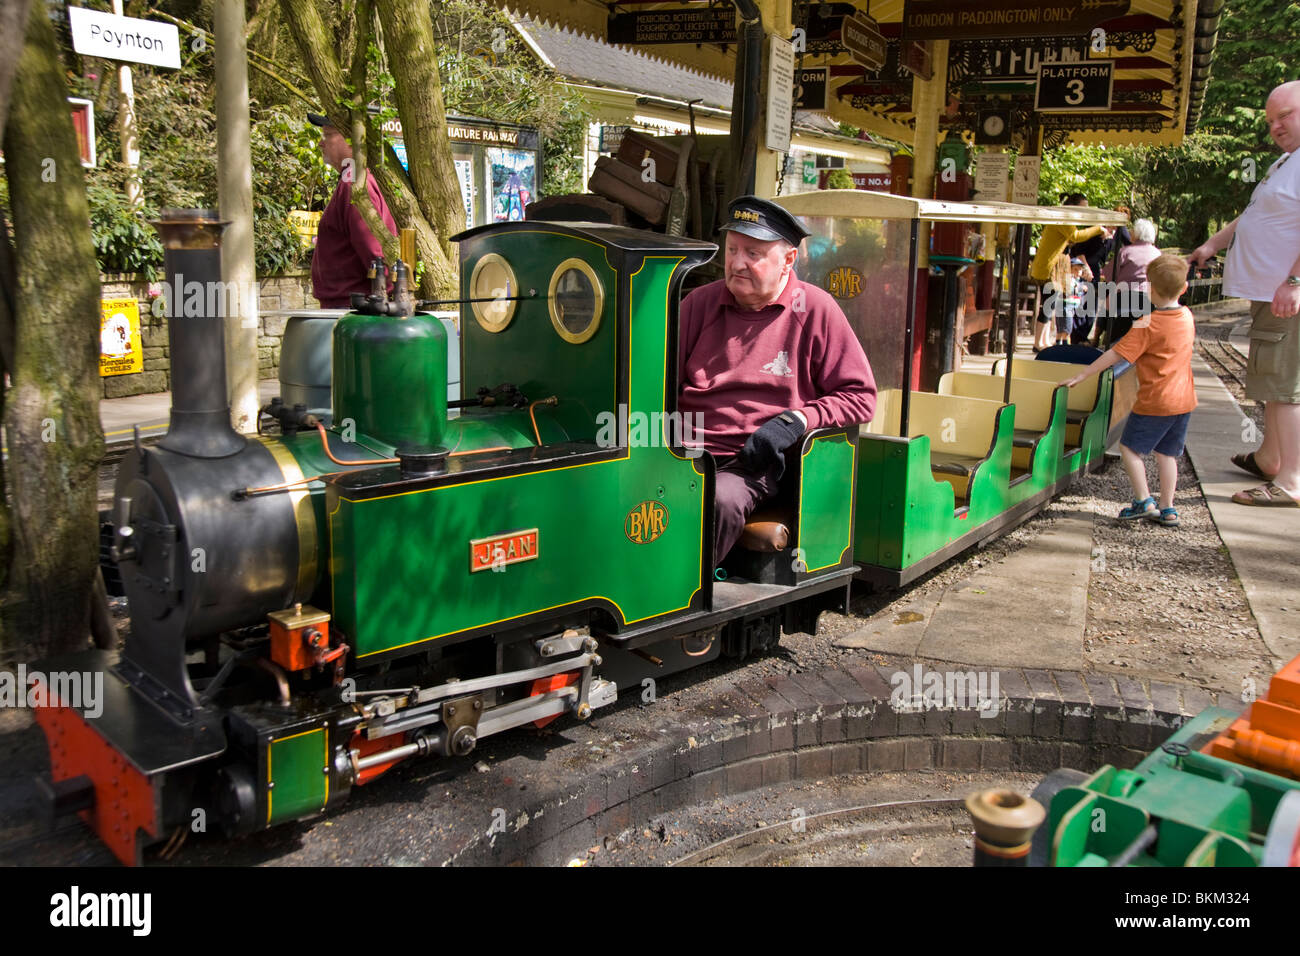 Miniature / model narrow gauge locomotive railway steam train and driver, at Brookside Garden Centre, Poynton. Cheshire. UK. Stock Photo